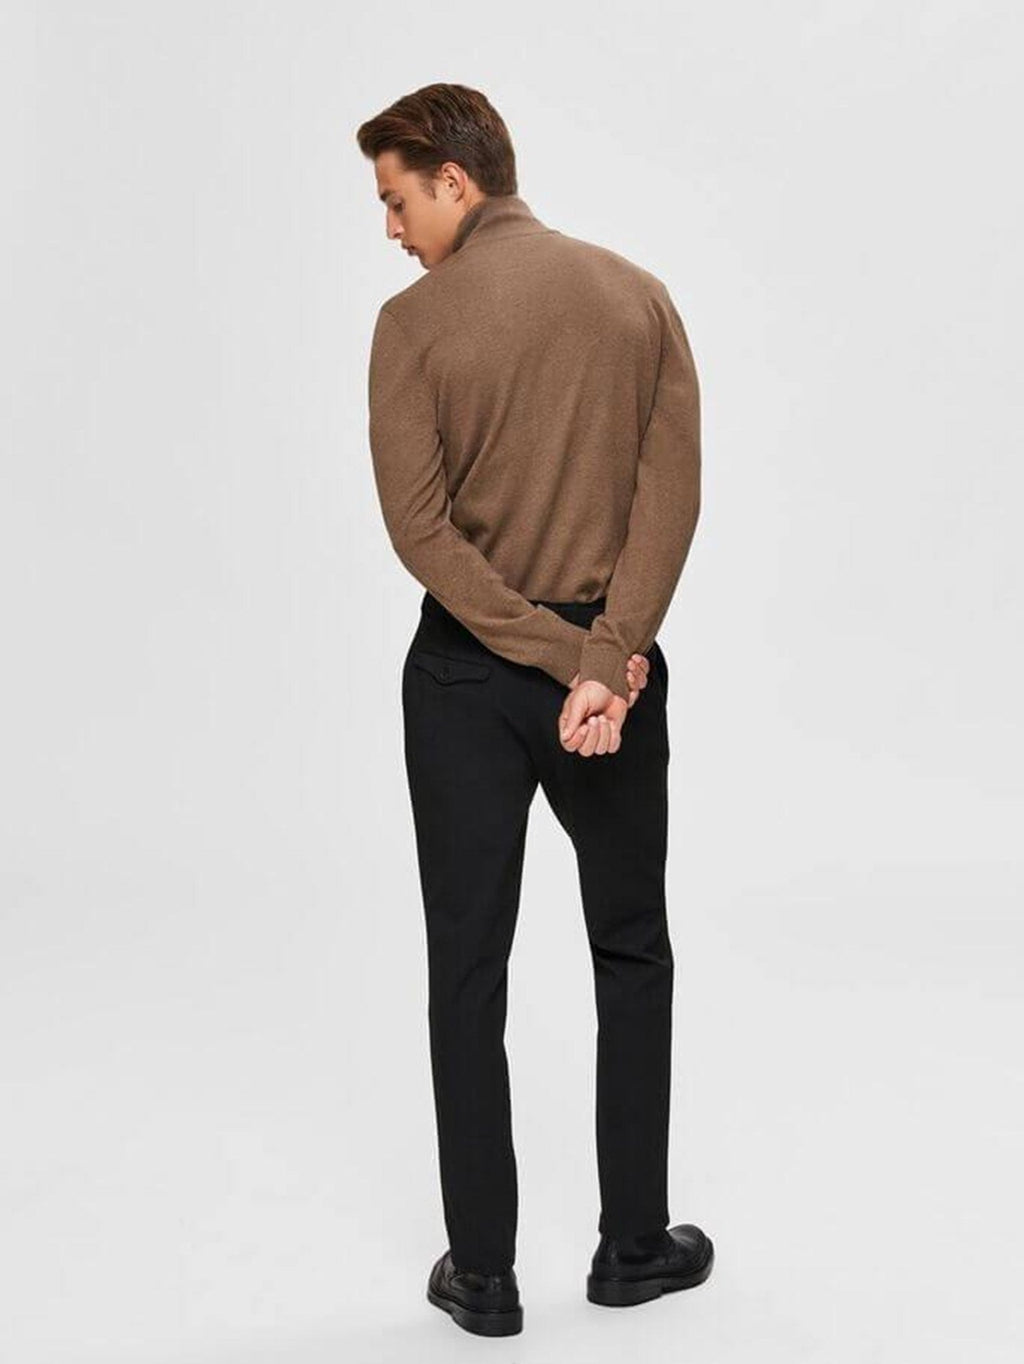 Pima half zip pullover - Brown